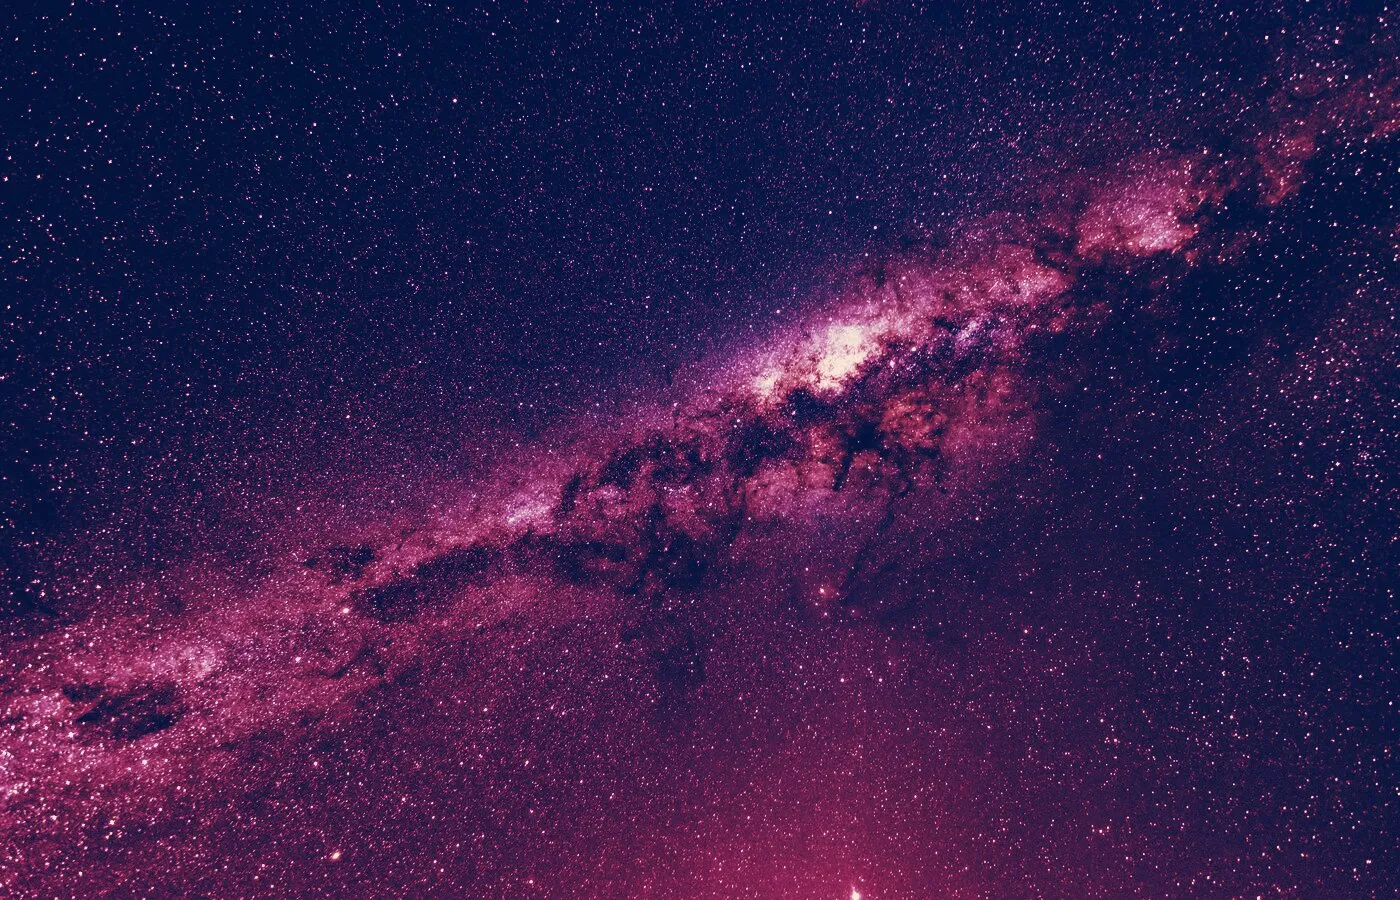 Galaxy. Photo credit: unsplash